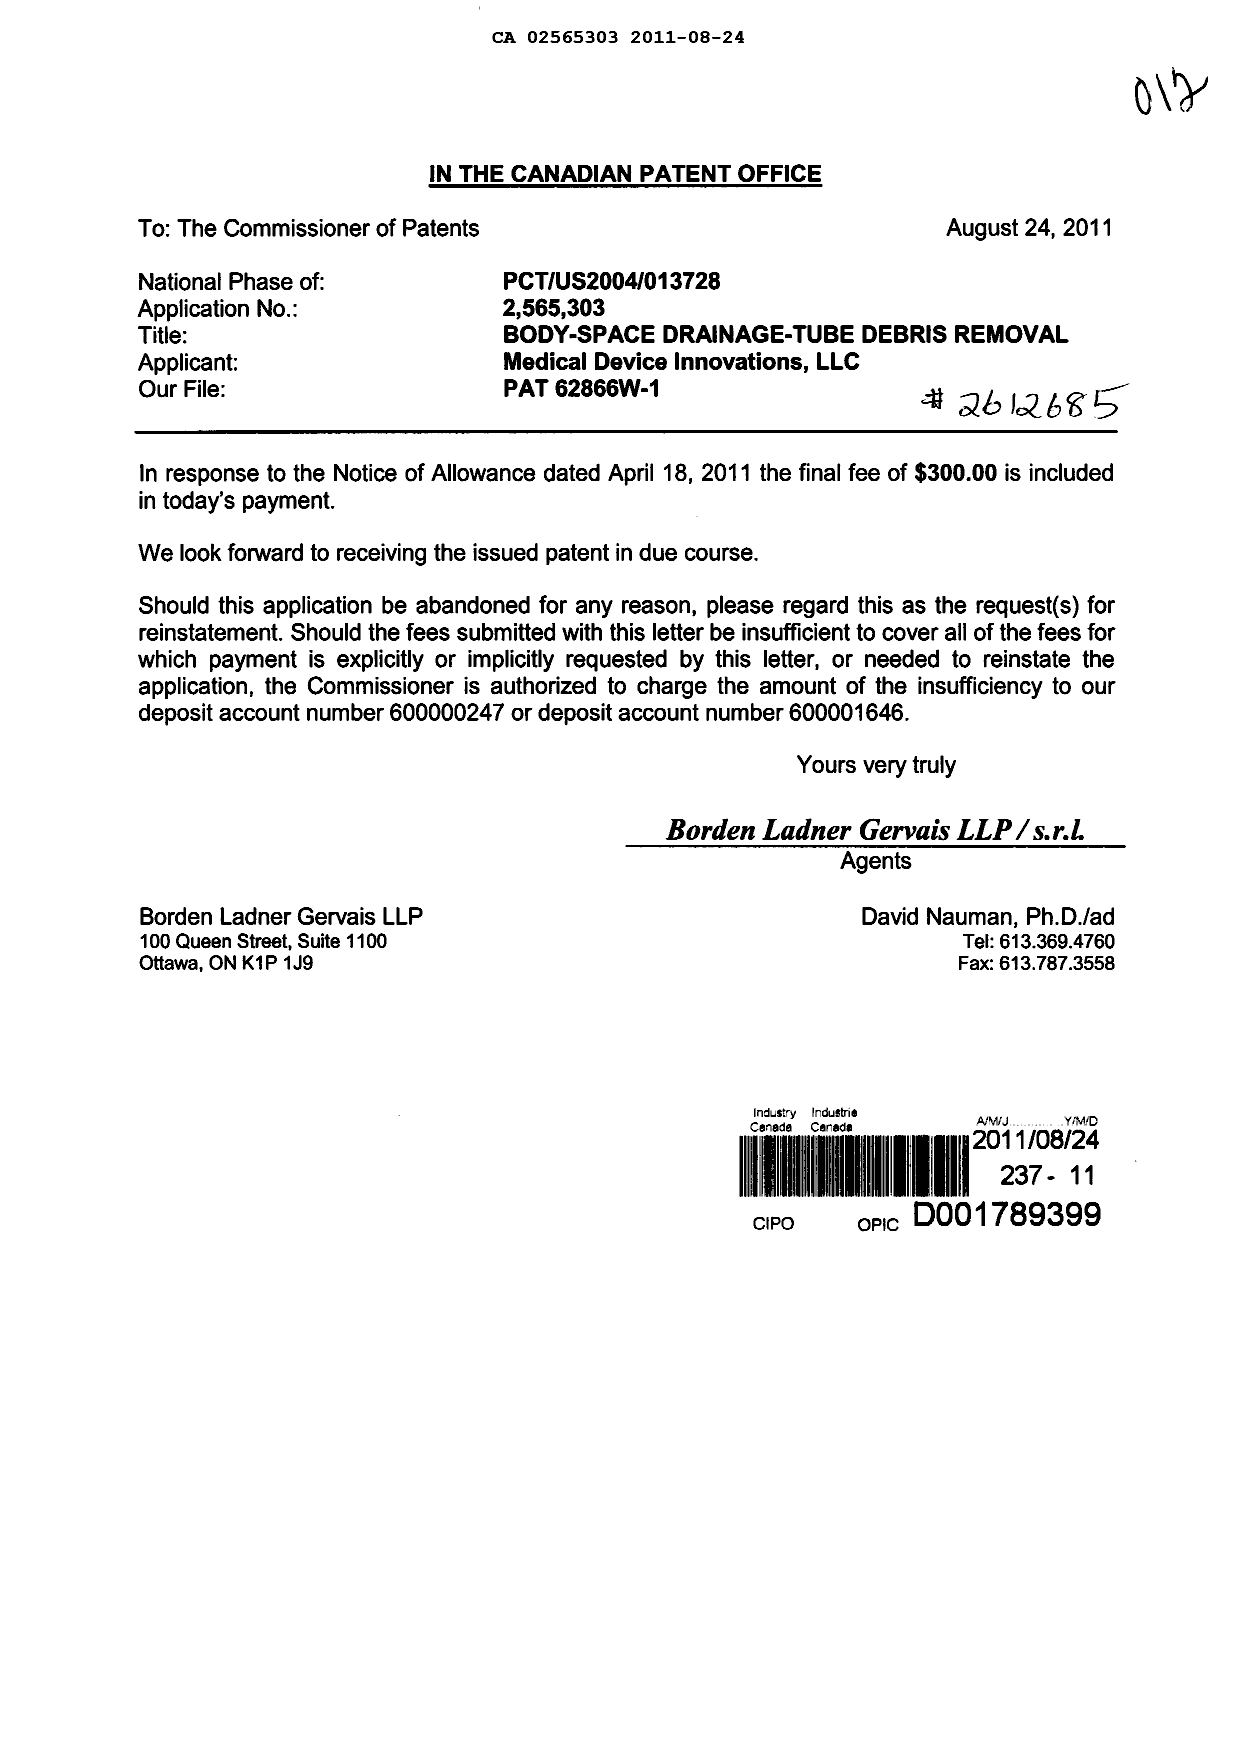 Canadian Patent Document 2565303. Correspondence 20110824. Image 1 of 1